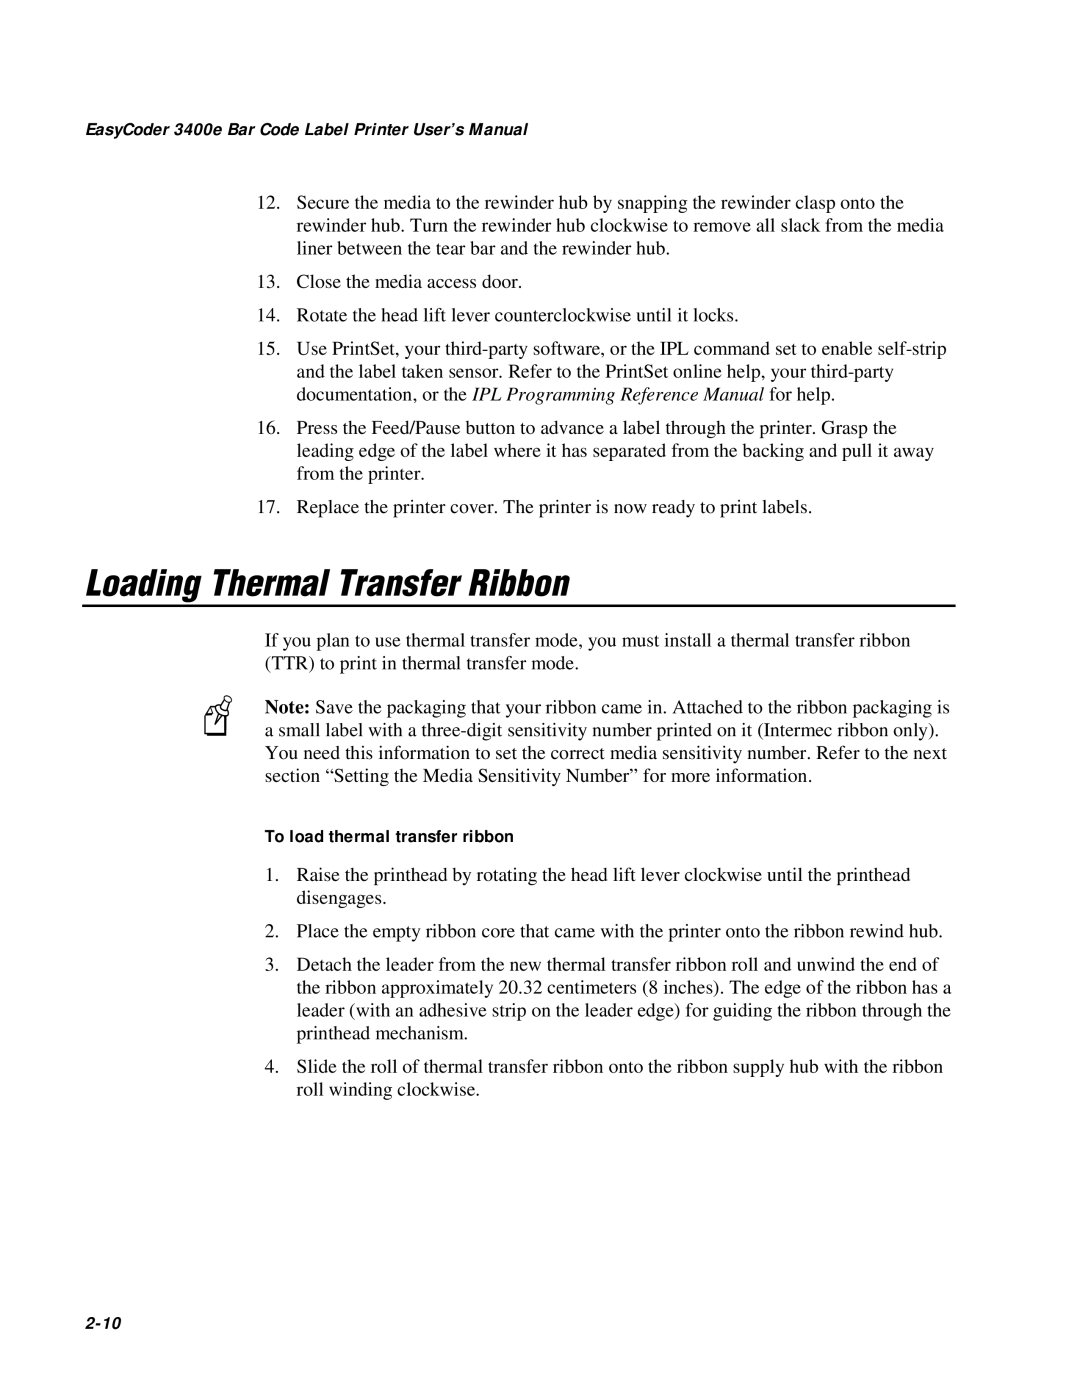 IBM user manual Loading Thermal Transfer Ribbon, EasyCoder 3400e Bar Code Label Printer User’s Manual, 2-10 